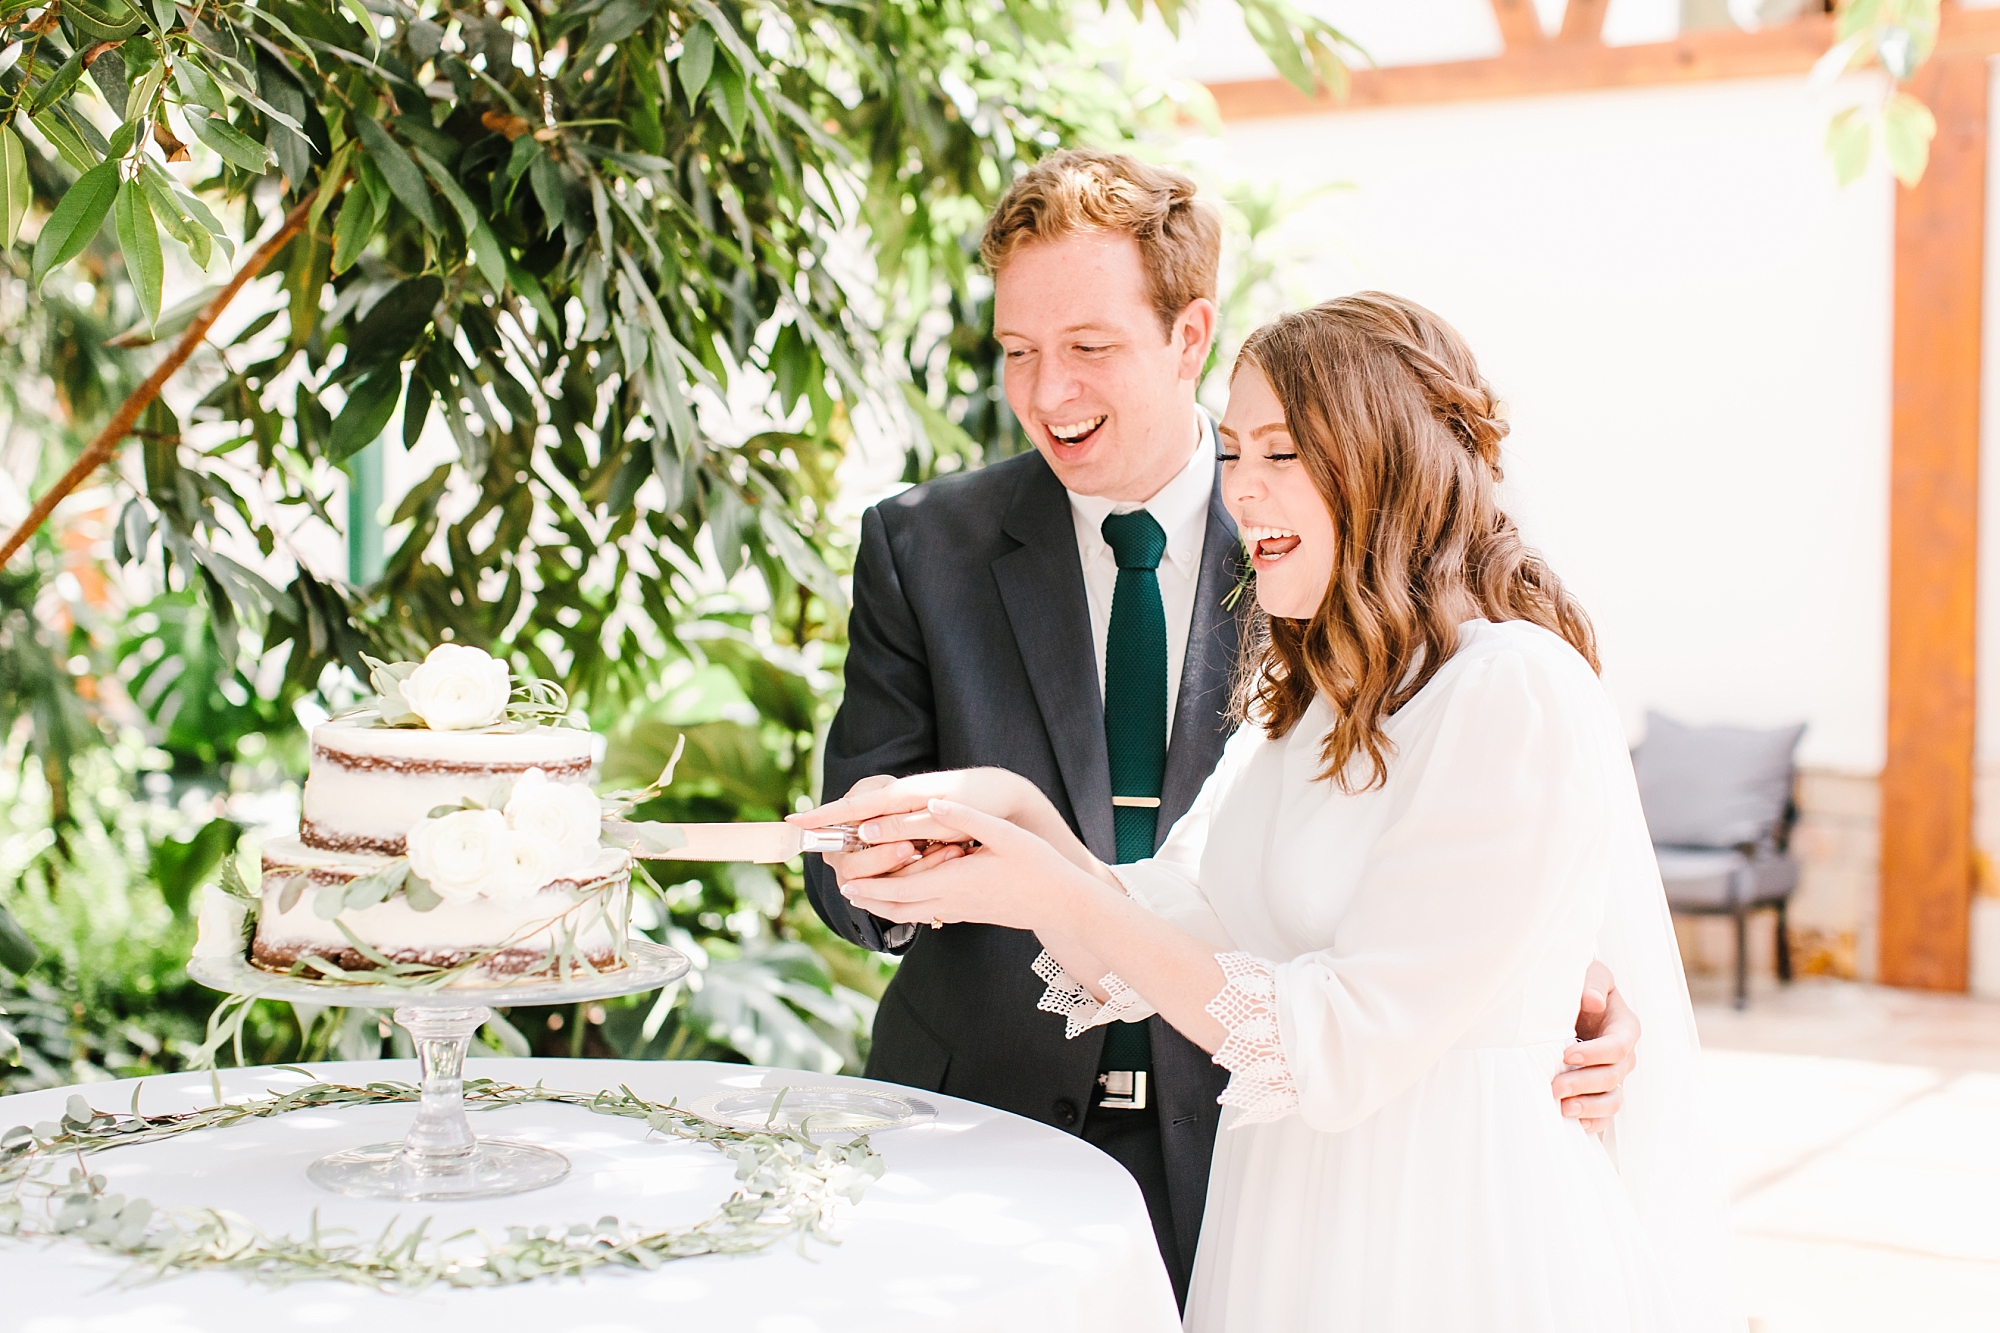 Highland Gardens reception: Cutting the cake